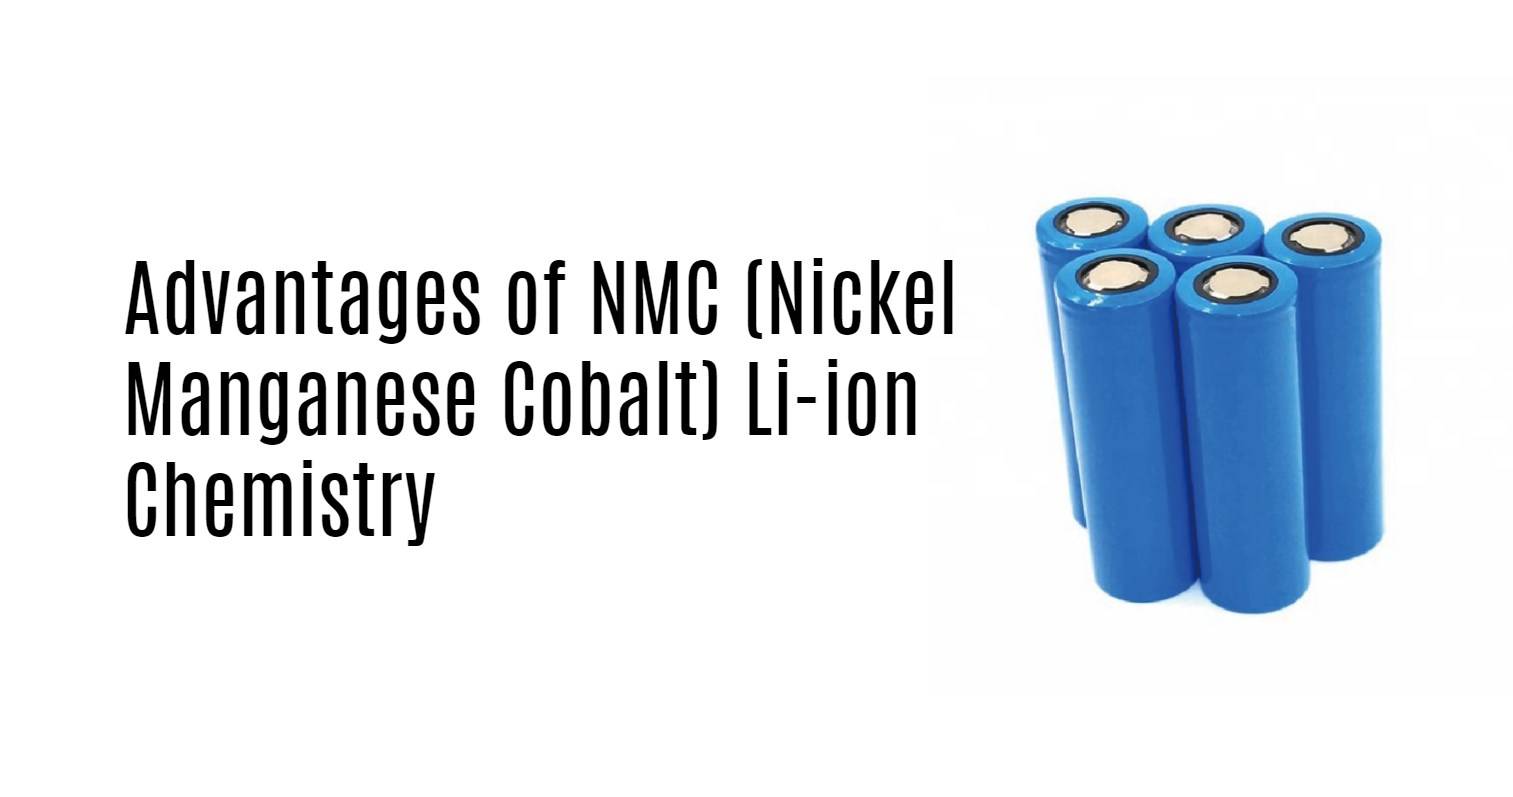 Advantages of NMC (Nickel Manganese Cobalt) Li-ion Chemistry 18650